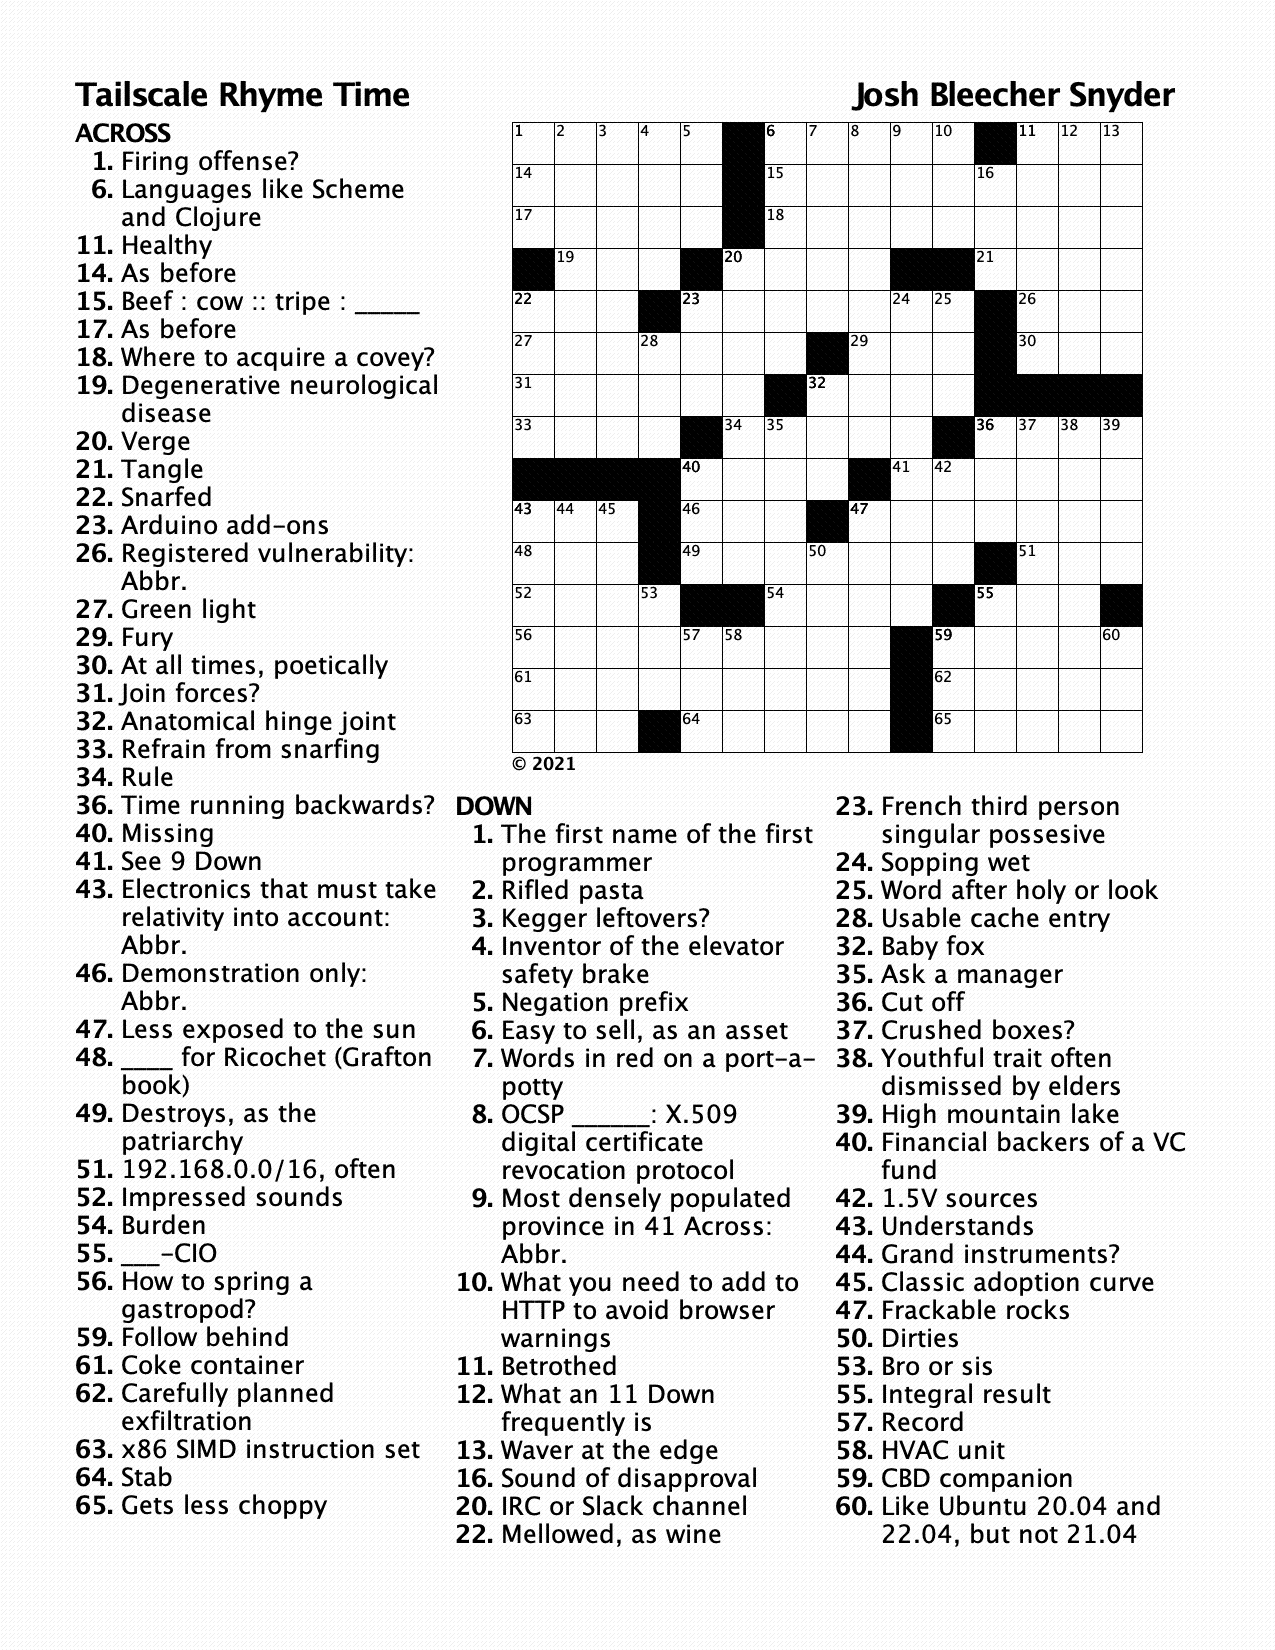 Tailscale December 2021 crossword